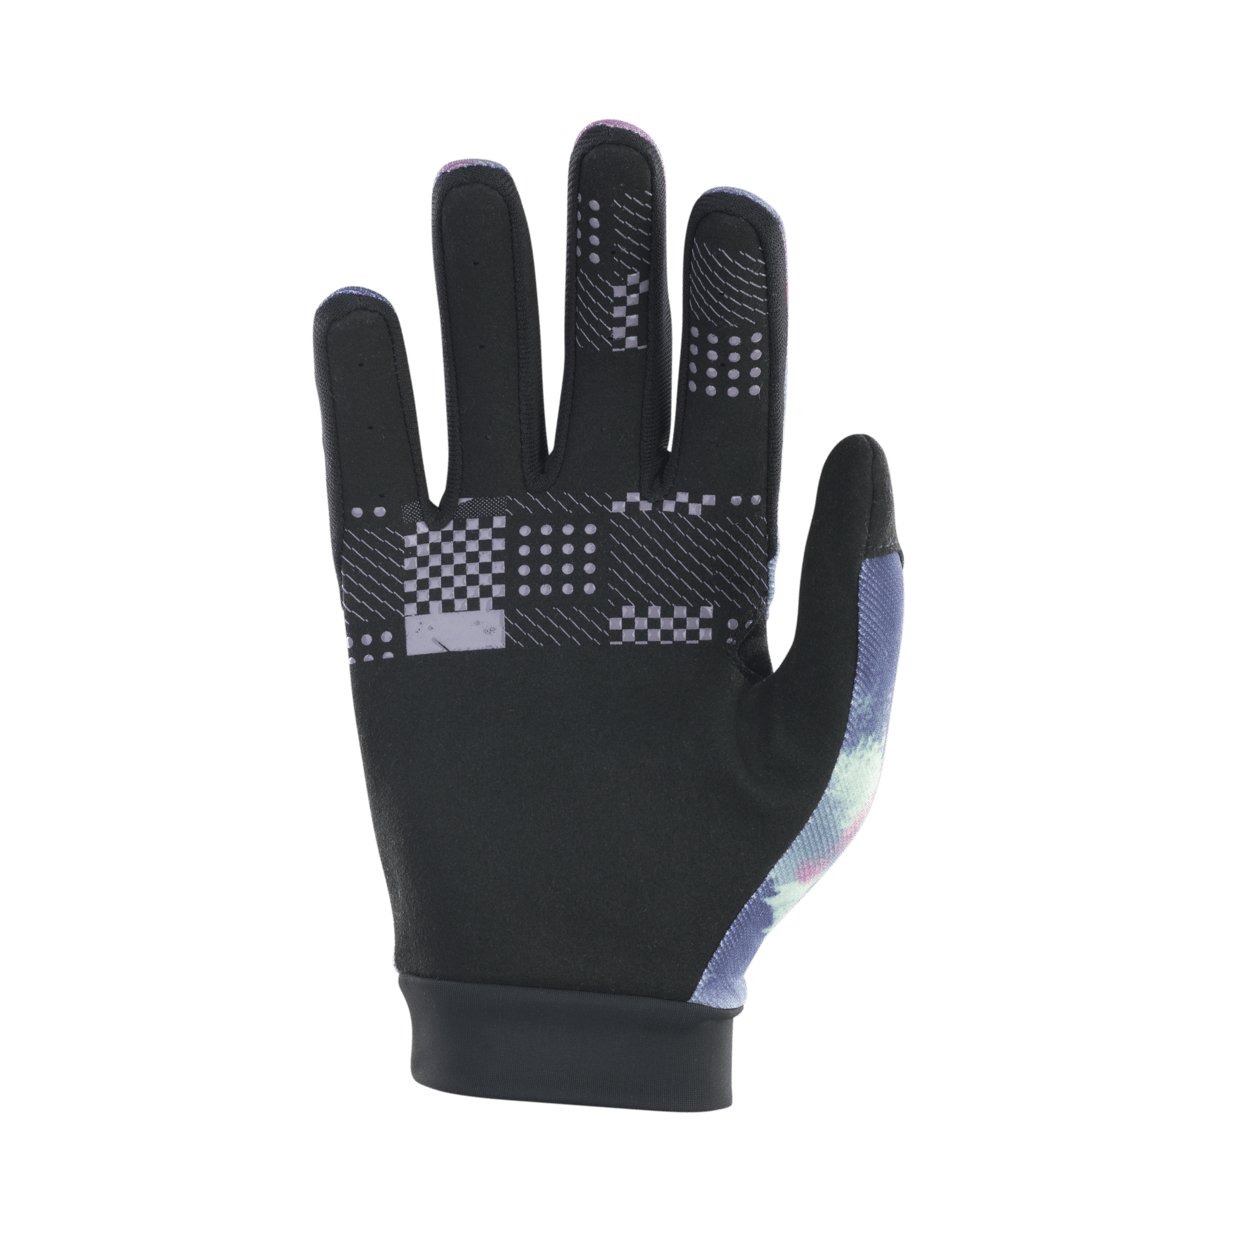 ION MTB Gloves Scrub 10 Years 2023 - Worthing Watersports - 9010583115191 - Gloves - ION Bike